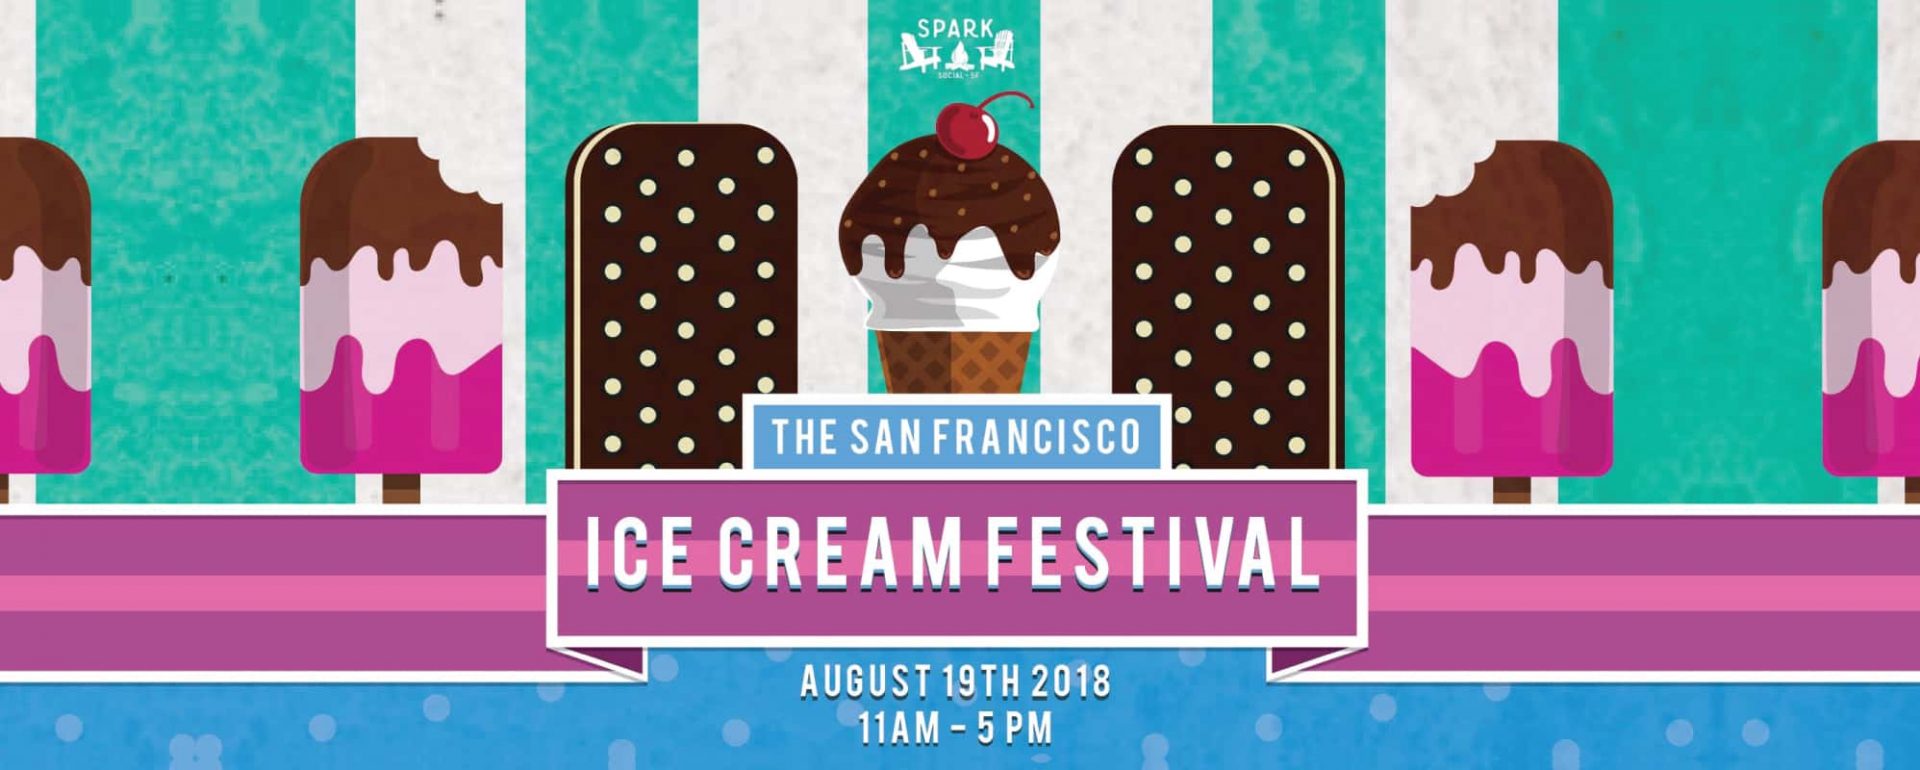 The San Francisco Ice Cream Festival